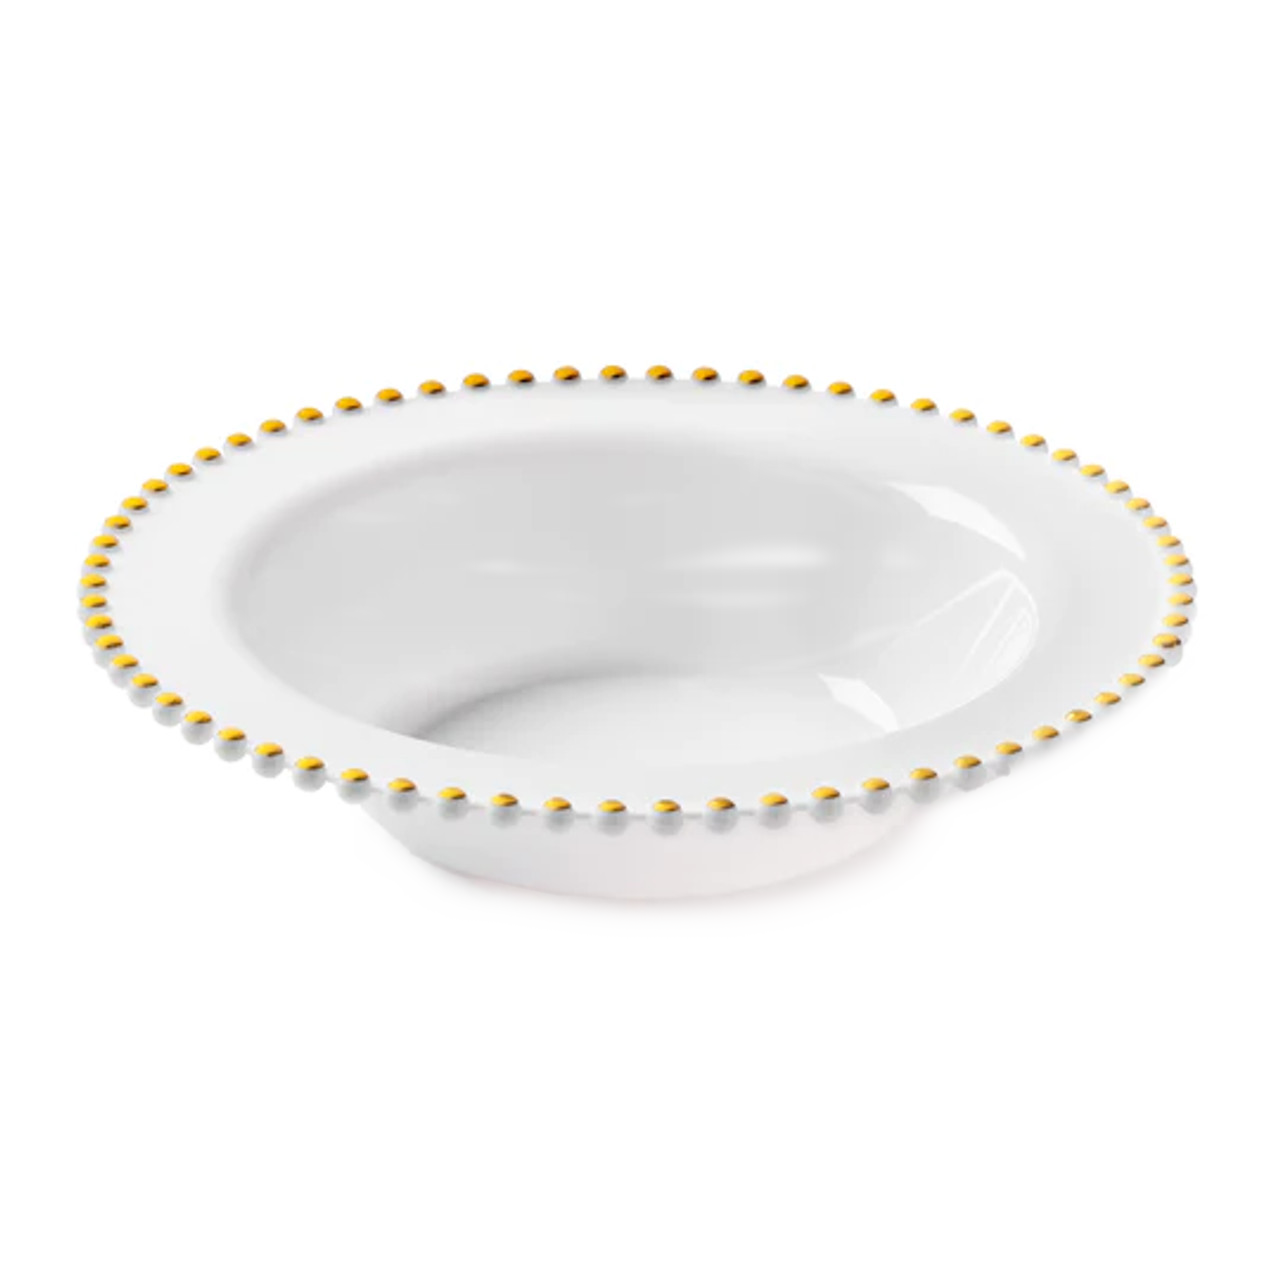 Beaded Premium Plastic Bowl – White With Gold Trim - 14oz – Set of 10